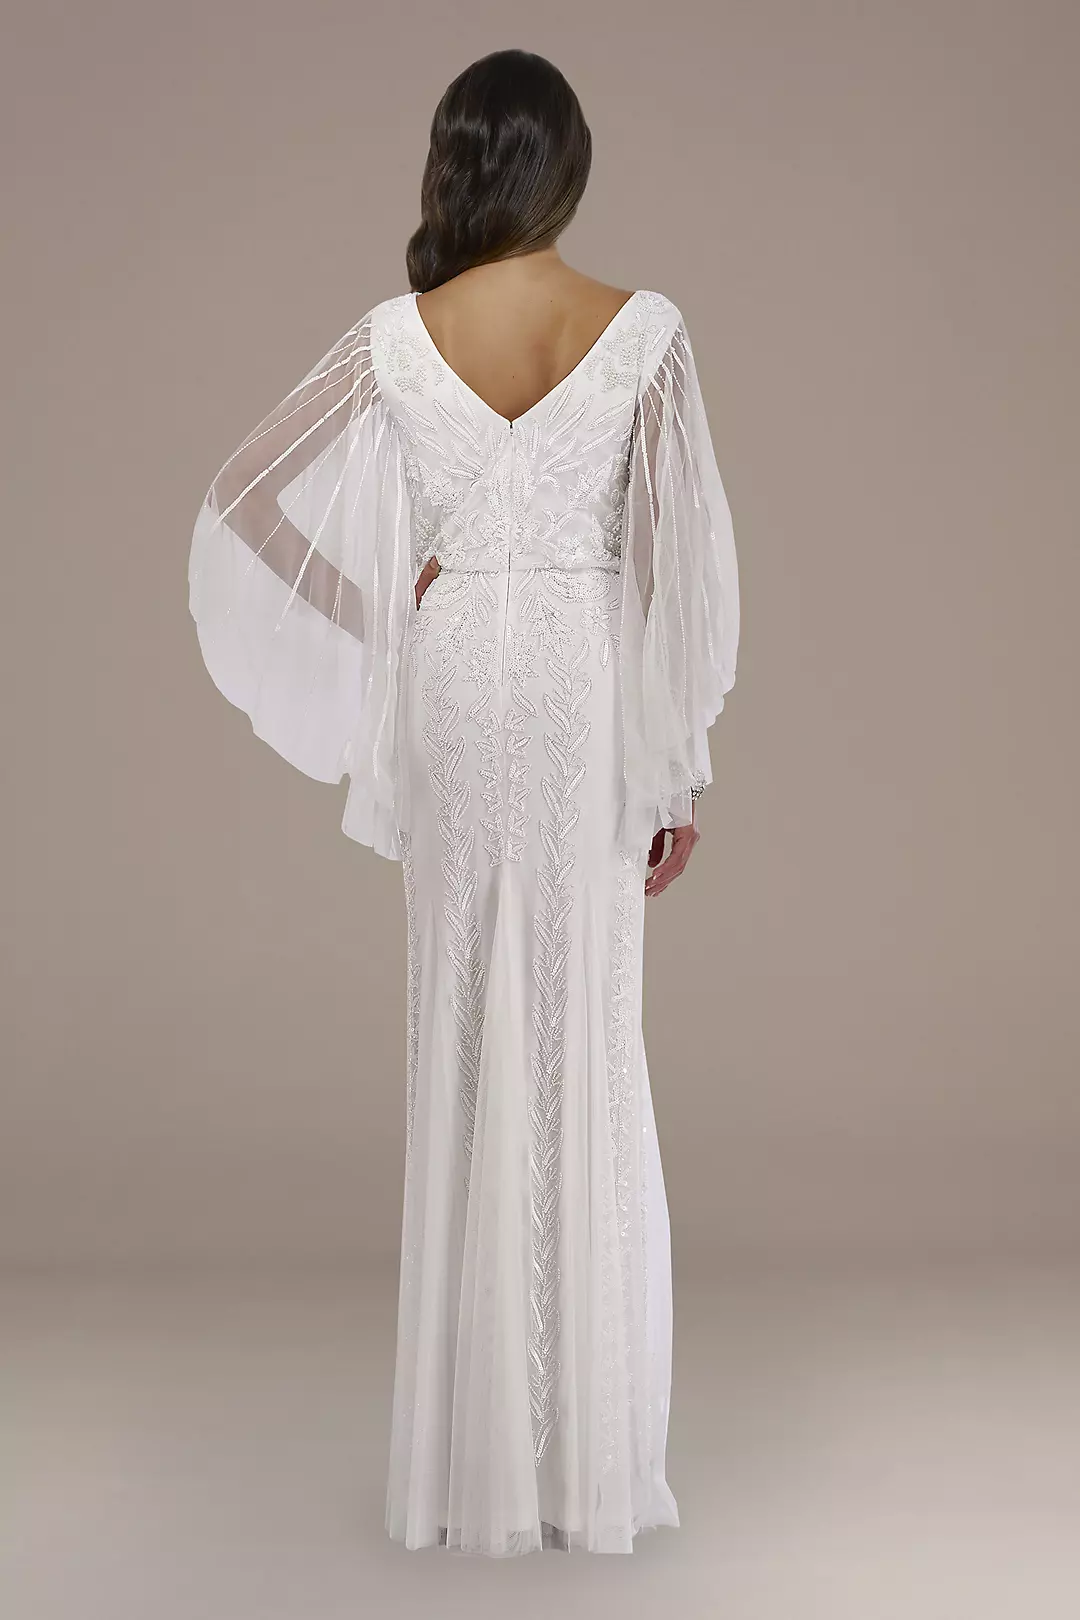 Lara Ella Beaded Cape Sleeve Wedding Dress Image 2